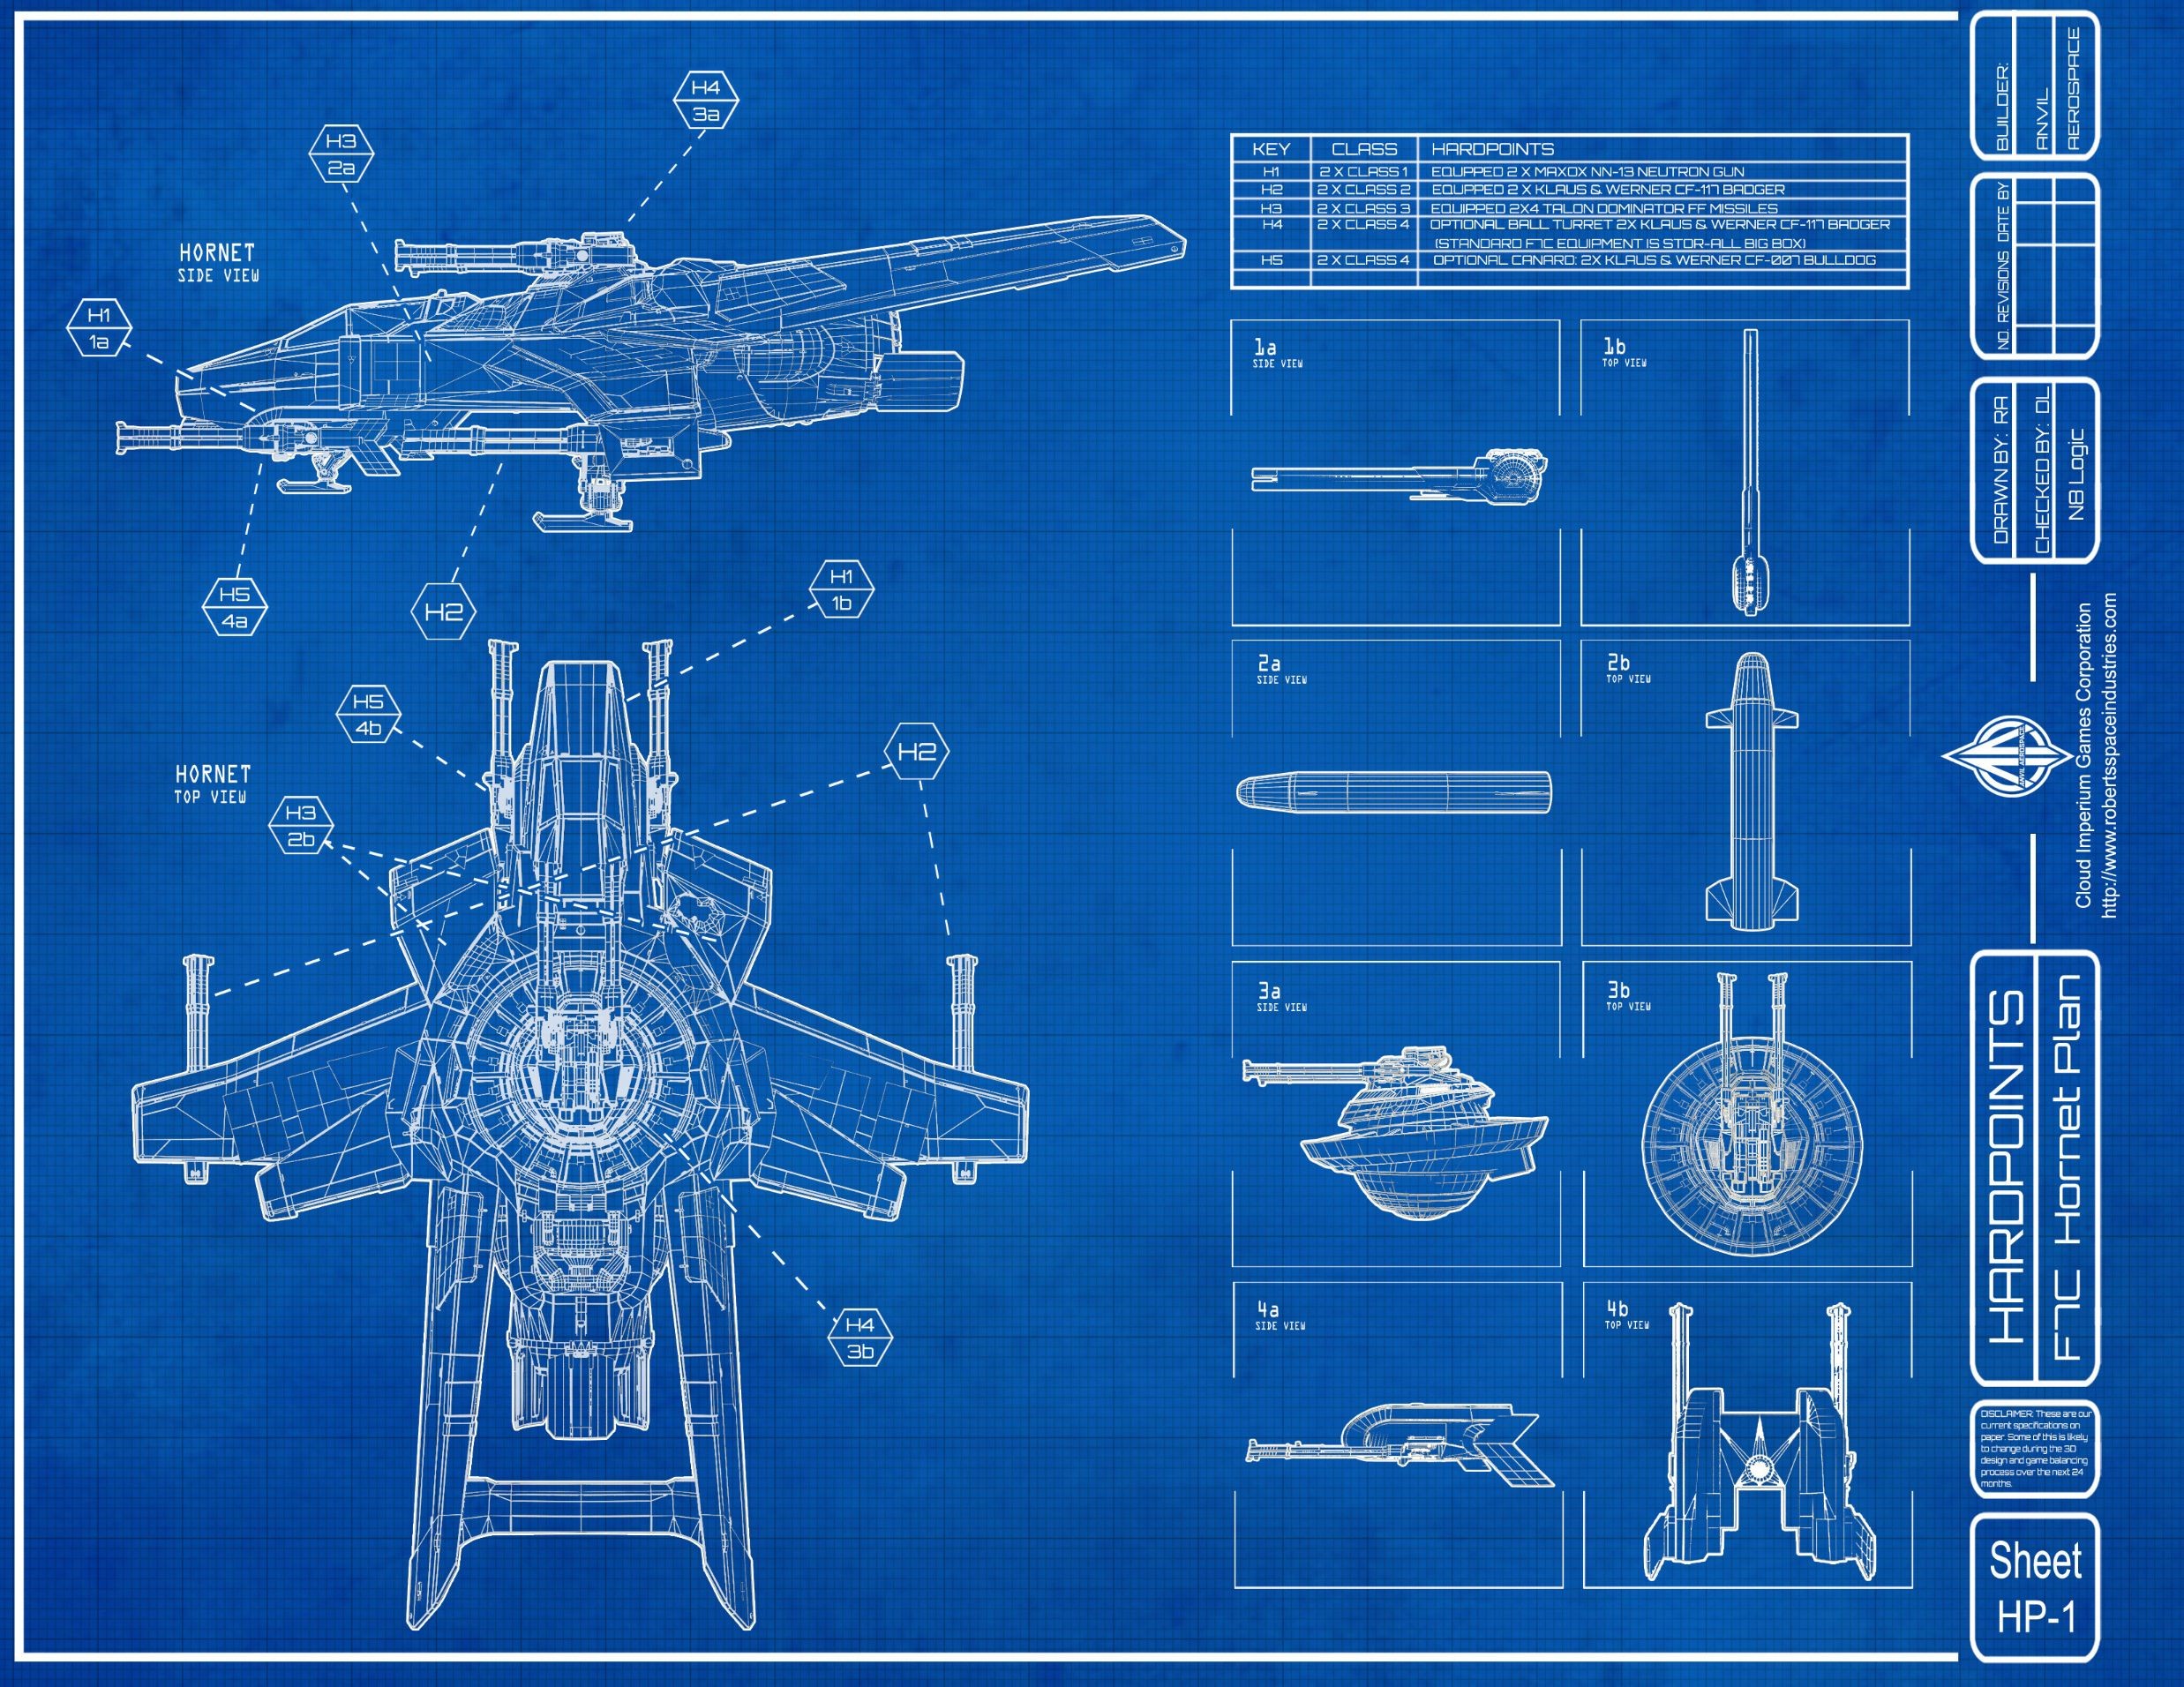 General 2475x1912 F7C Hornet Star Citizen schematic blueprints video games blue PC gaming science fiction